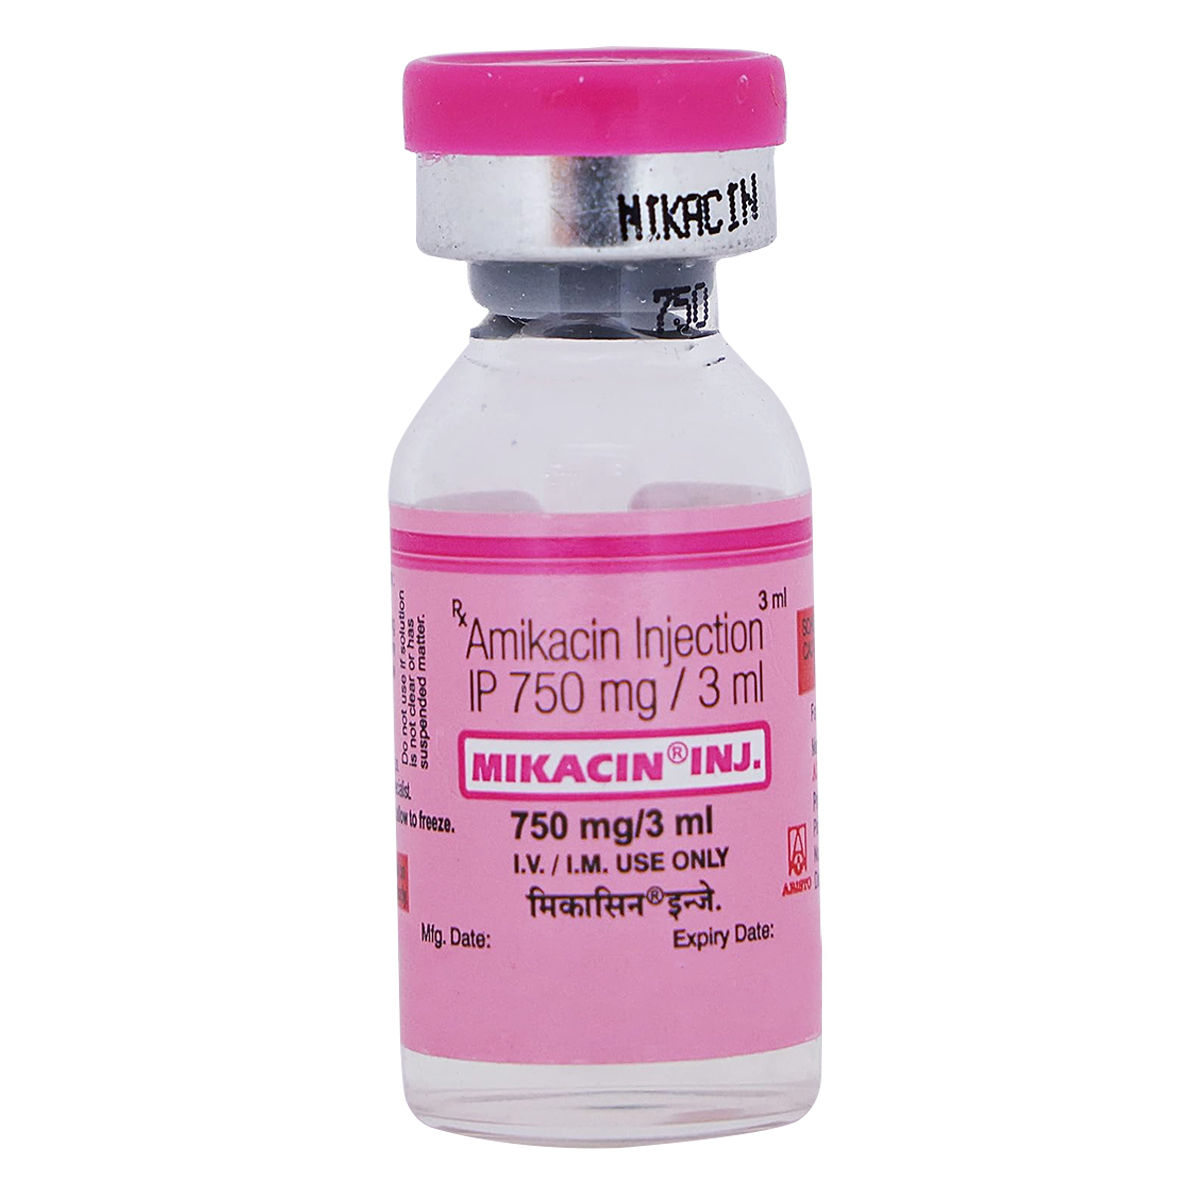 Buy Mikacin 750 mg Injection 3 ml Online